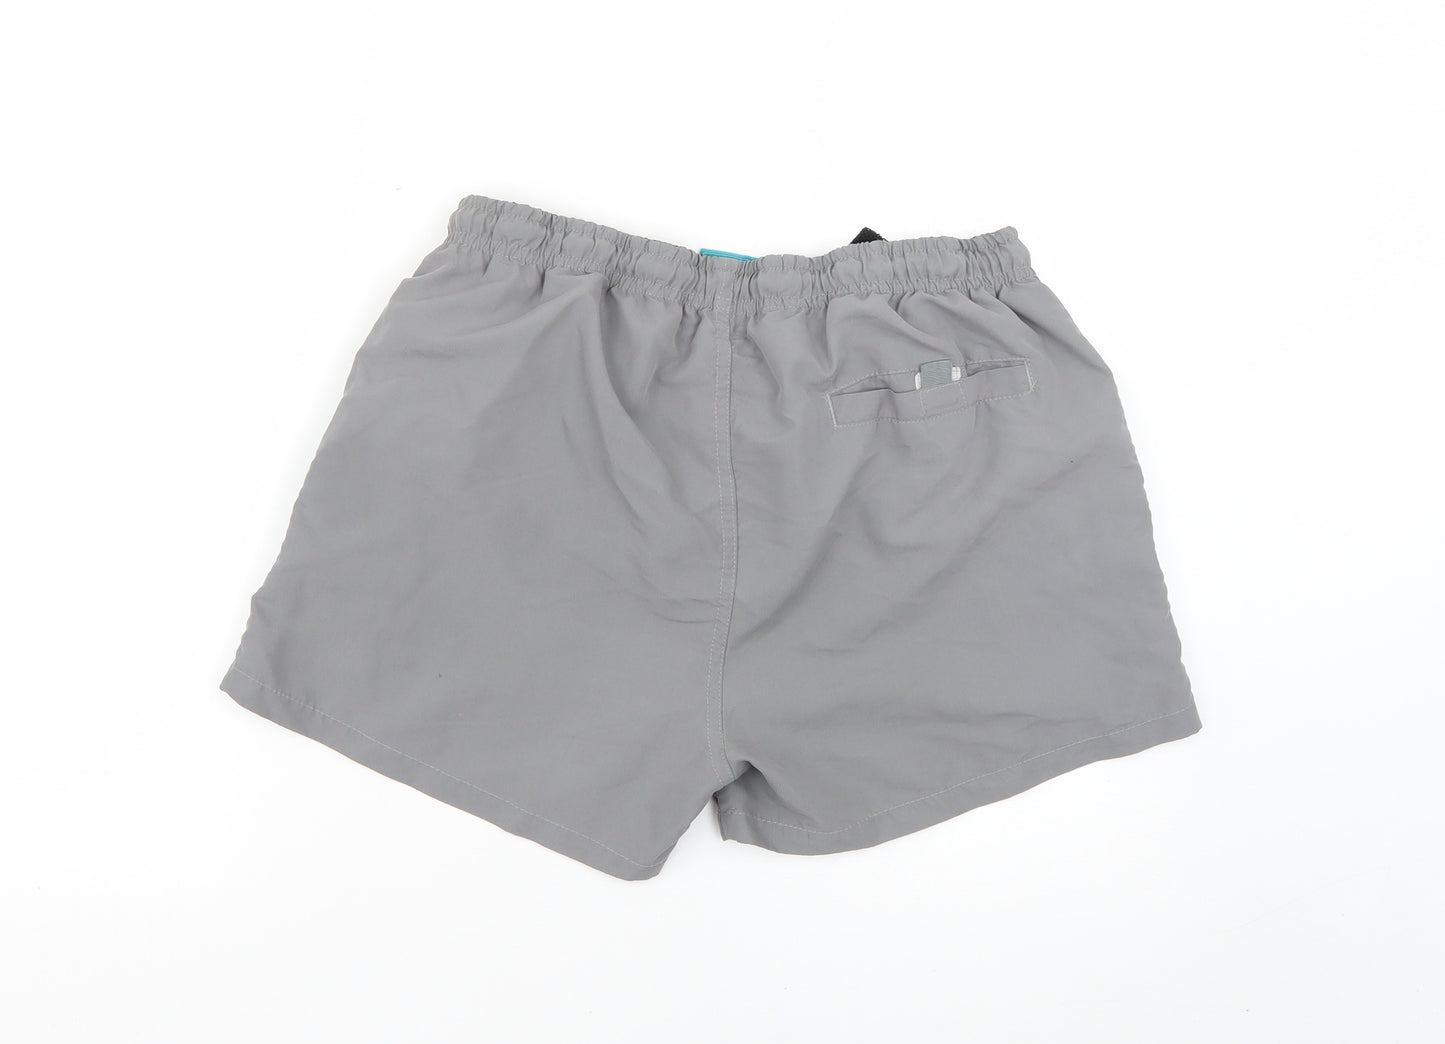 Cedar Wood State Mens Grey   Sweat Shorts Size M